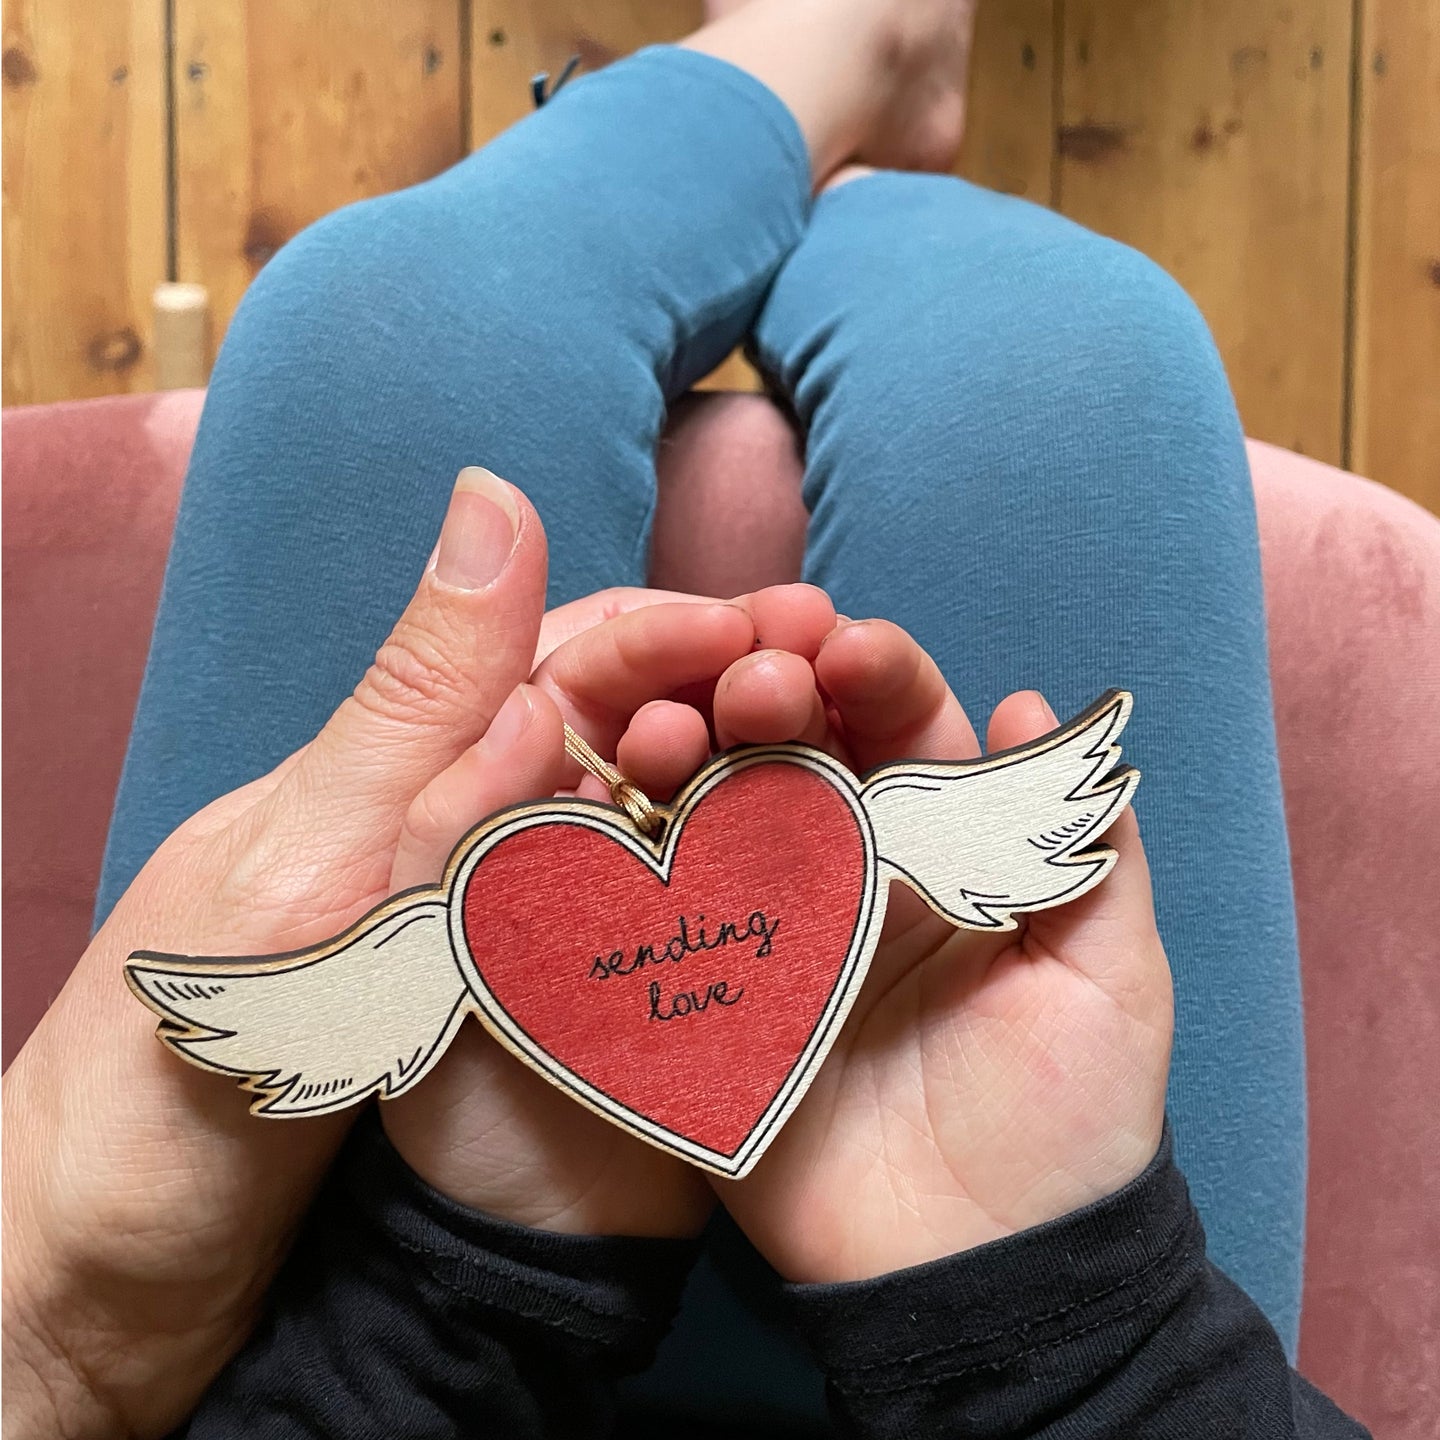 Sending Love wooden heart decoration